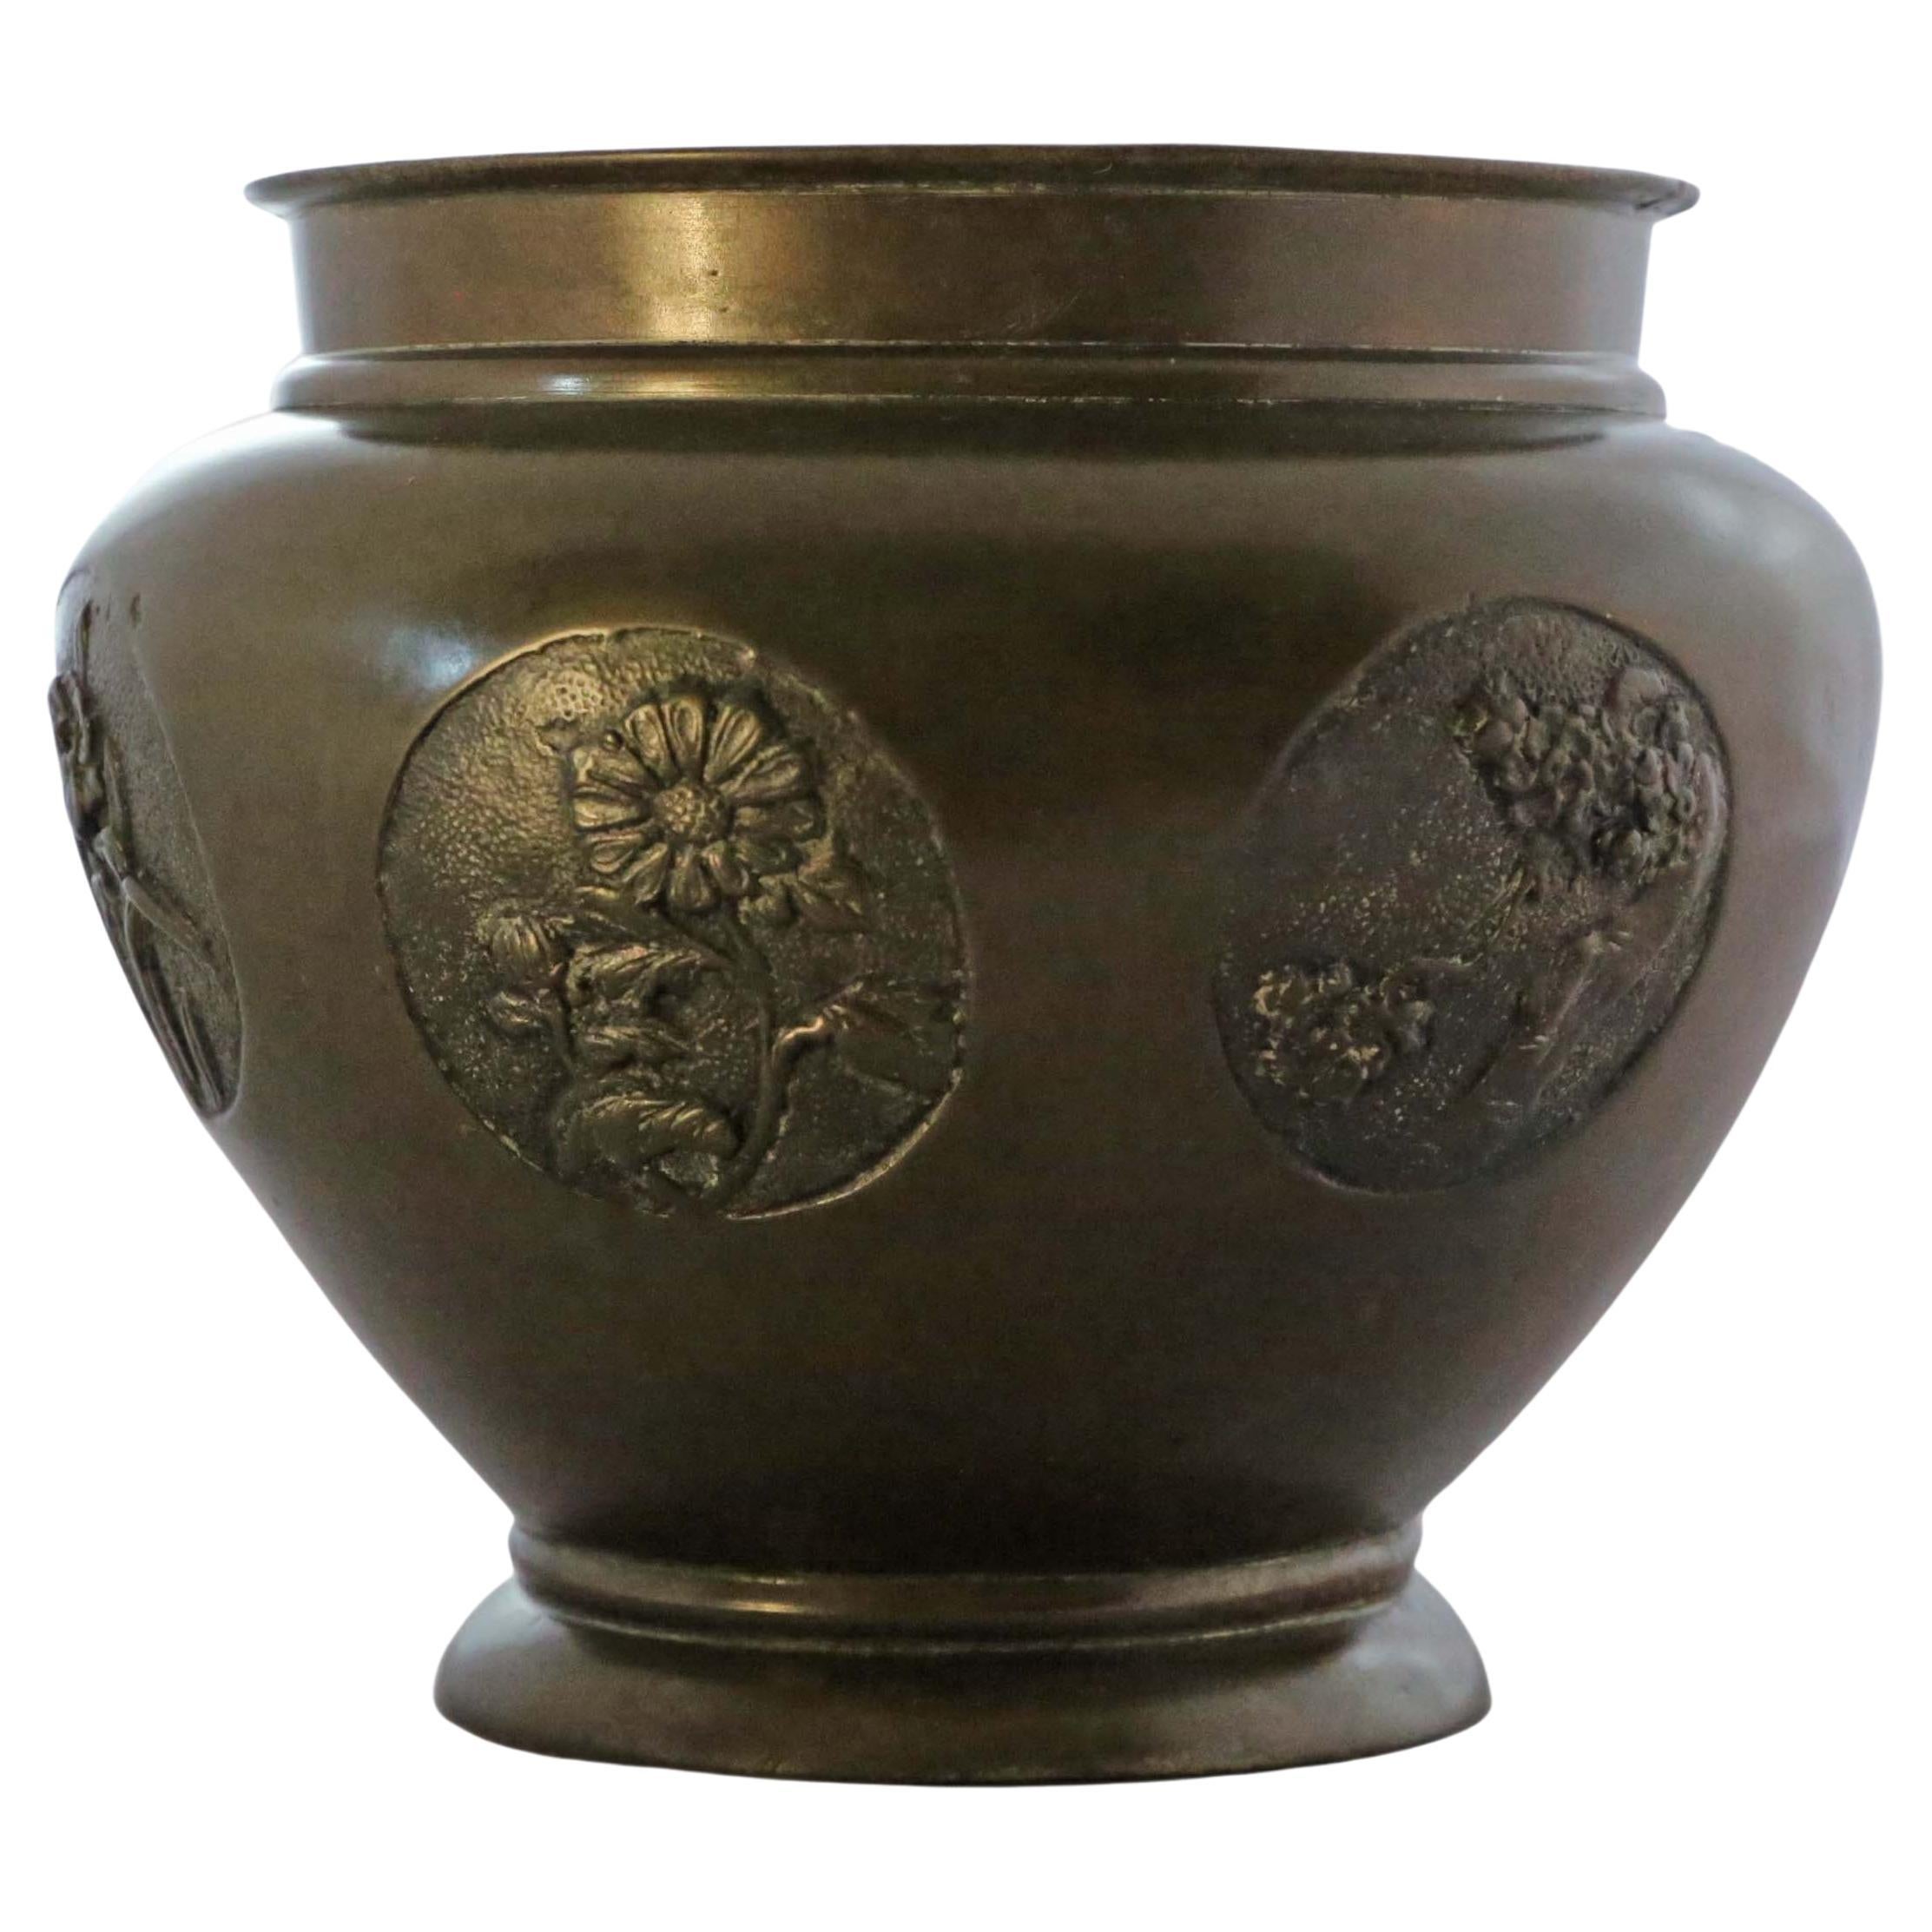 Antique Oriental Japanese Bronze Jardinière Planter Bowl Censor Meiji Period